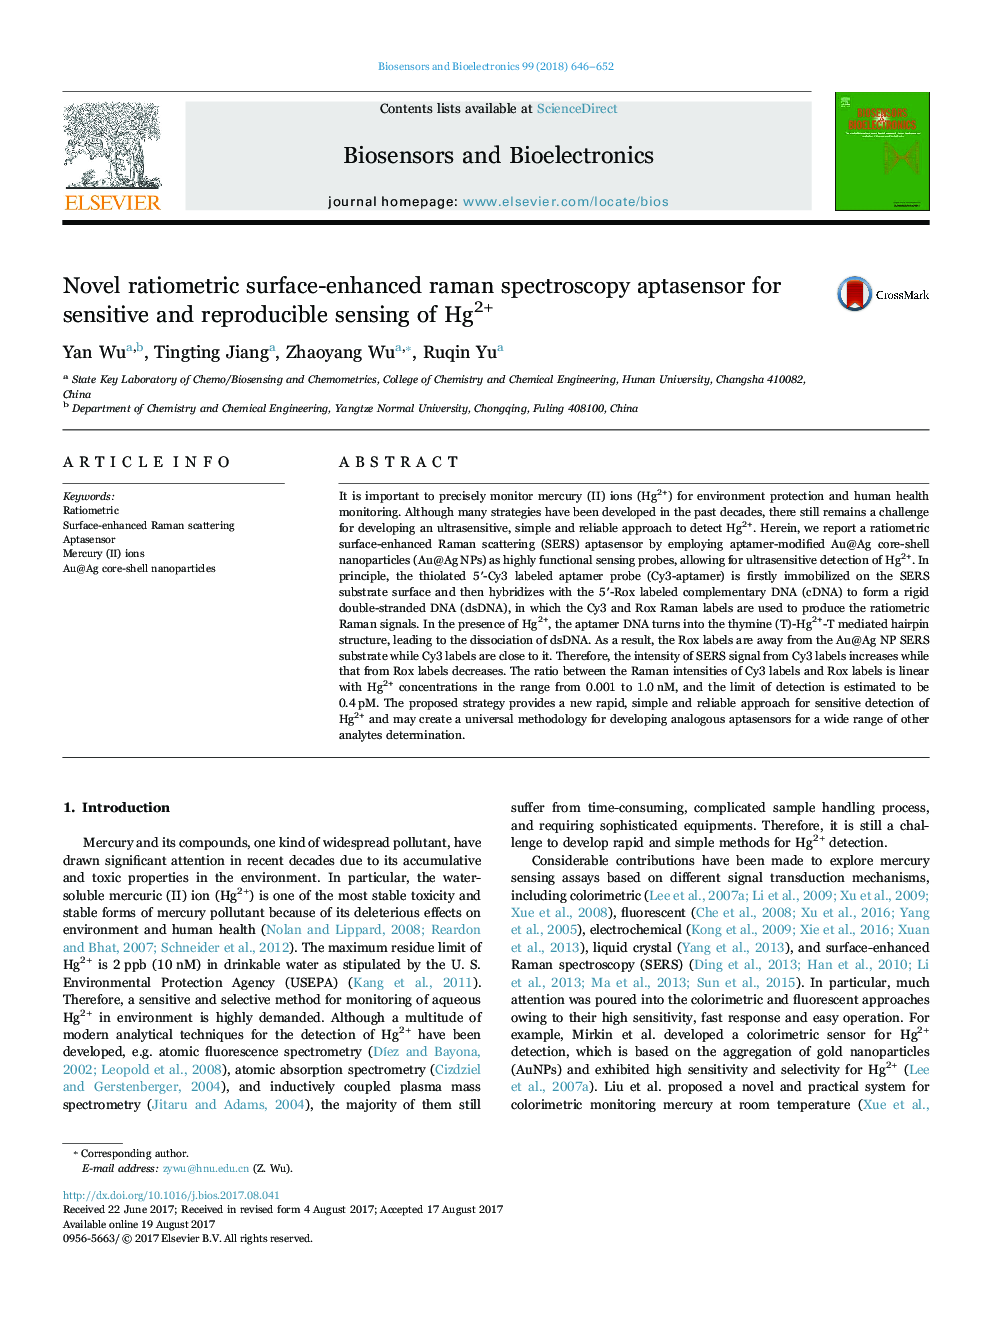 Novel ratiometric surface-enhanced raman spectroscopy aptasensor for sensitive and reproducible sensing of Hg2+